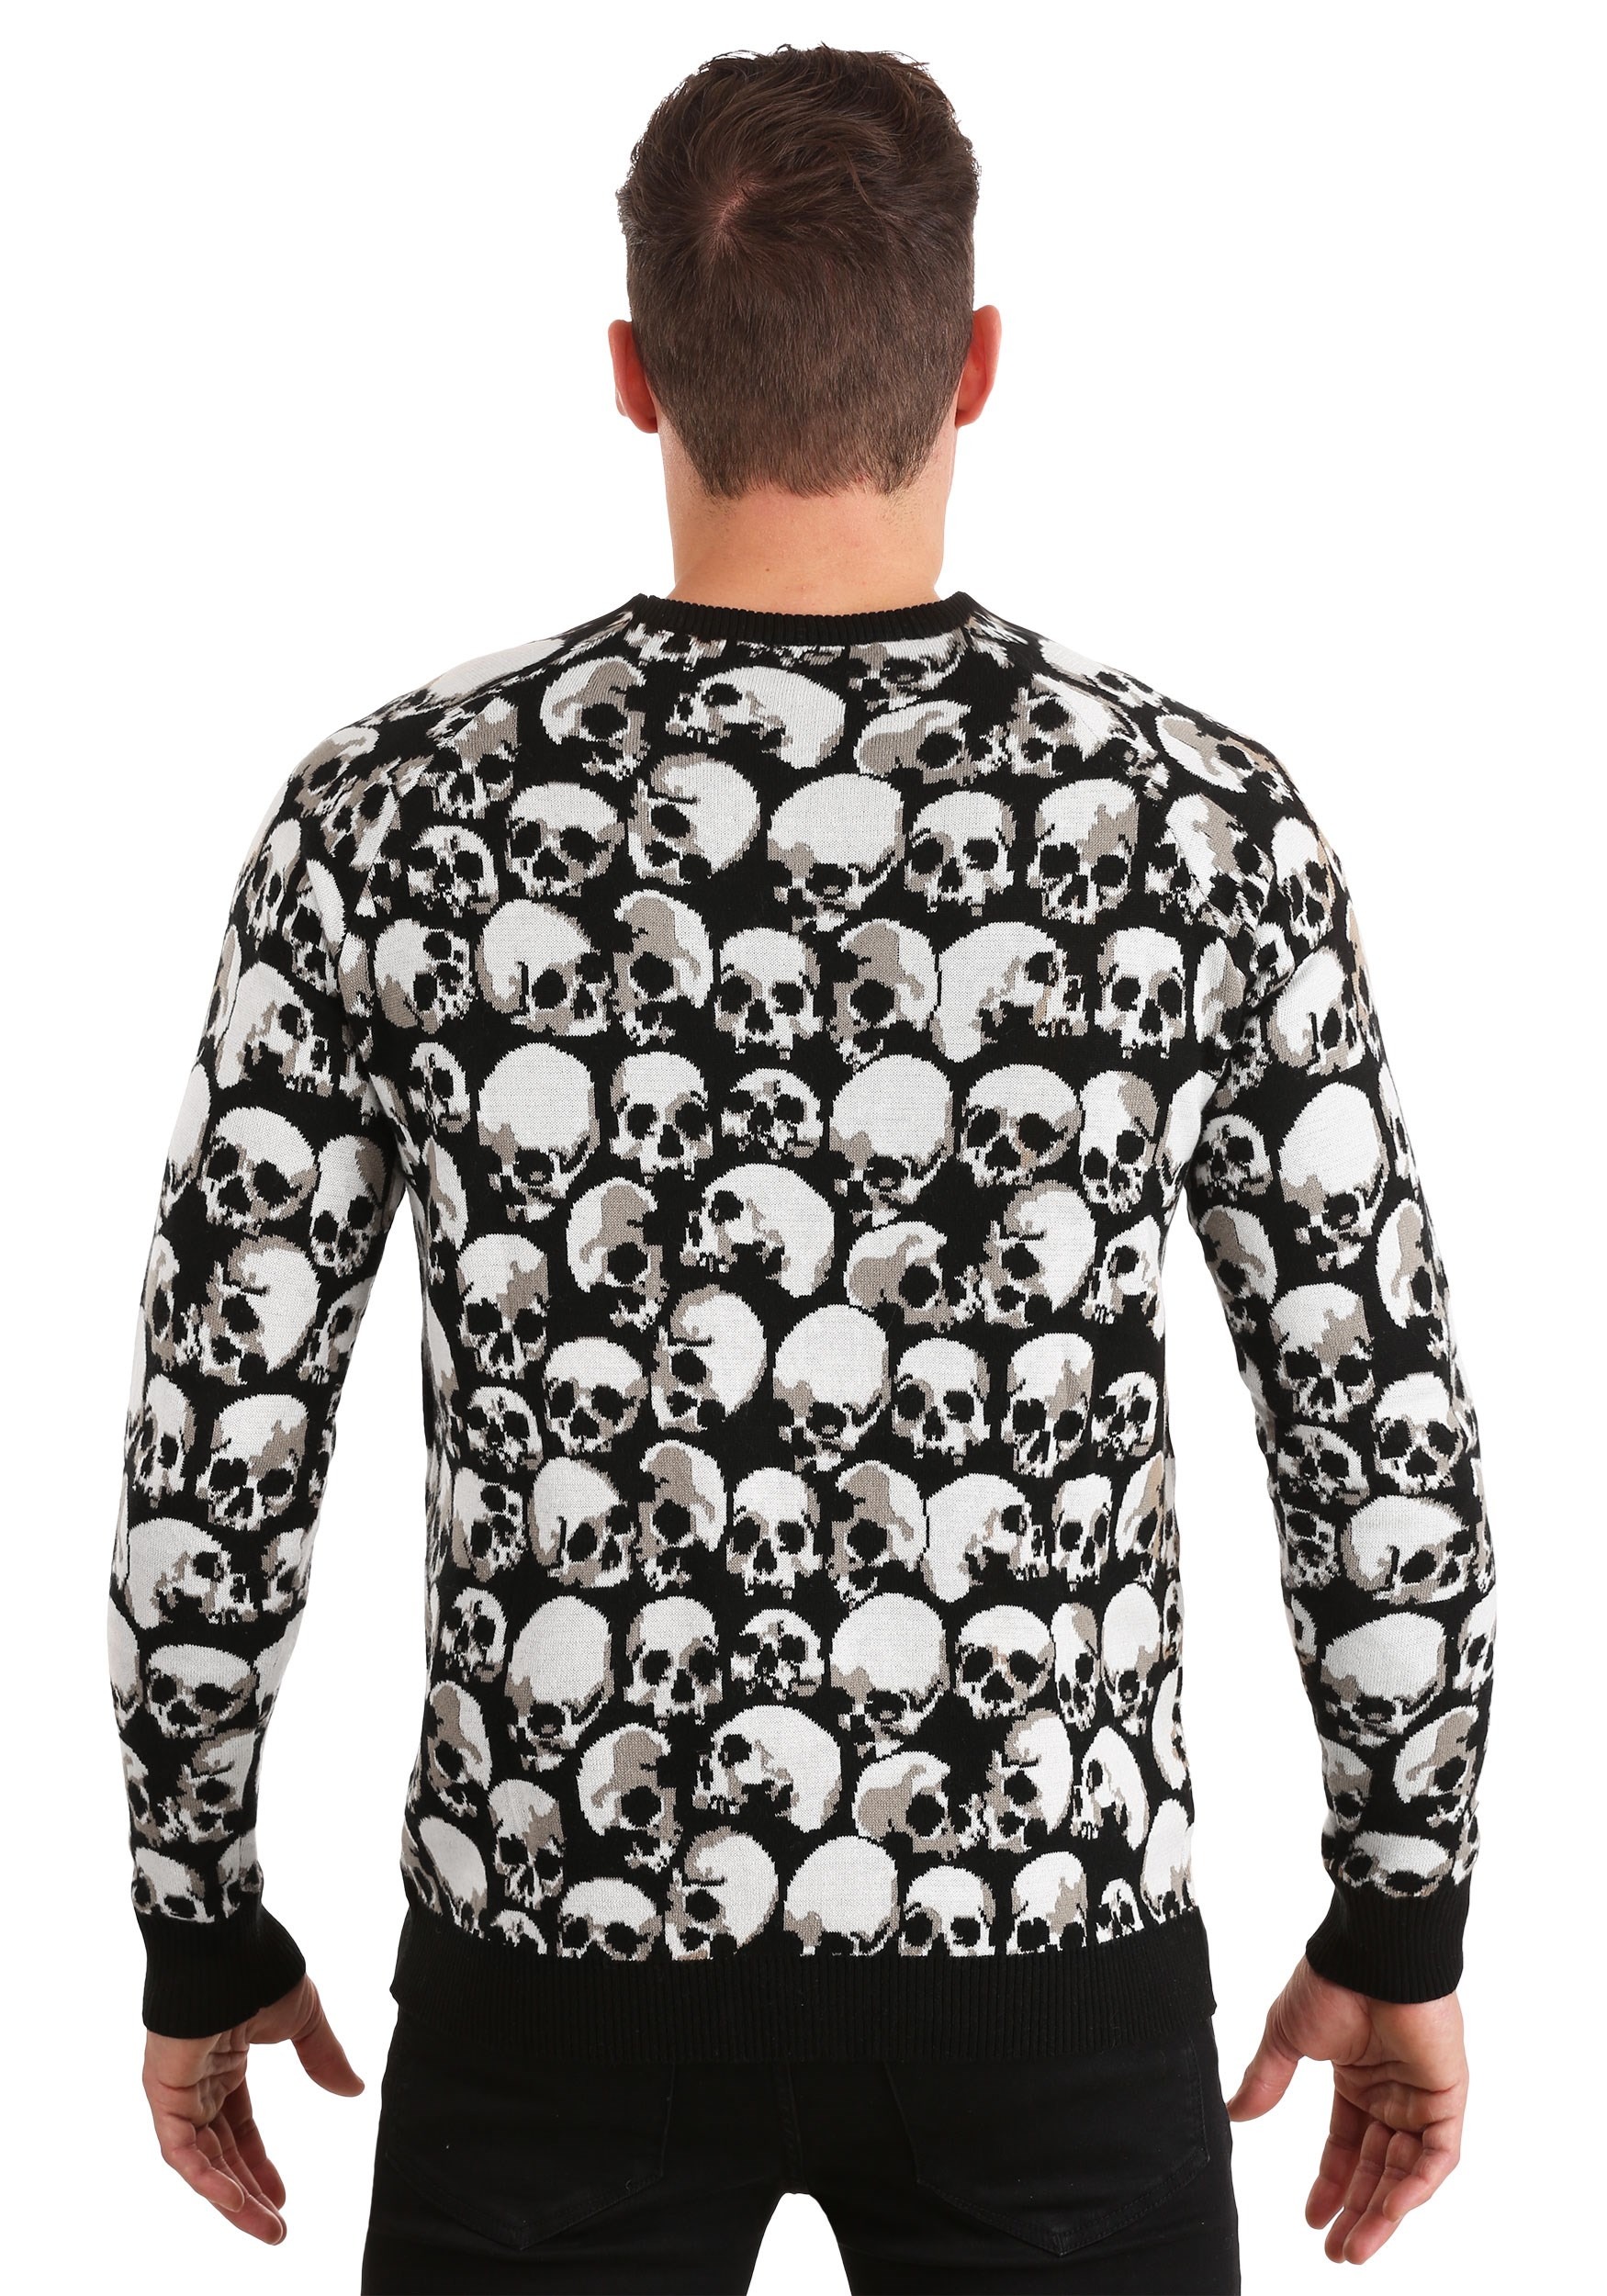 Skulls Galore Halloween Sweater